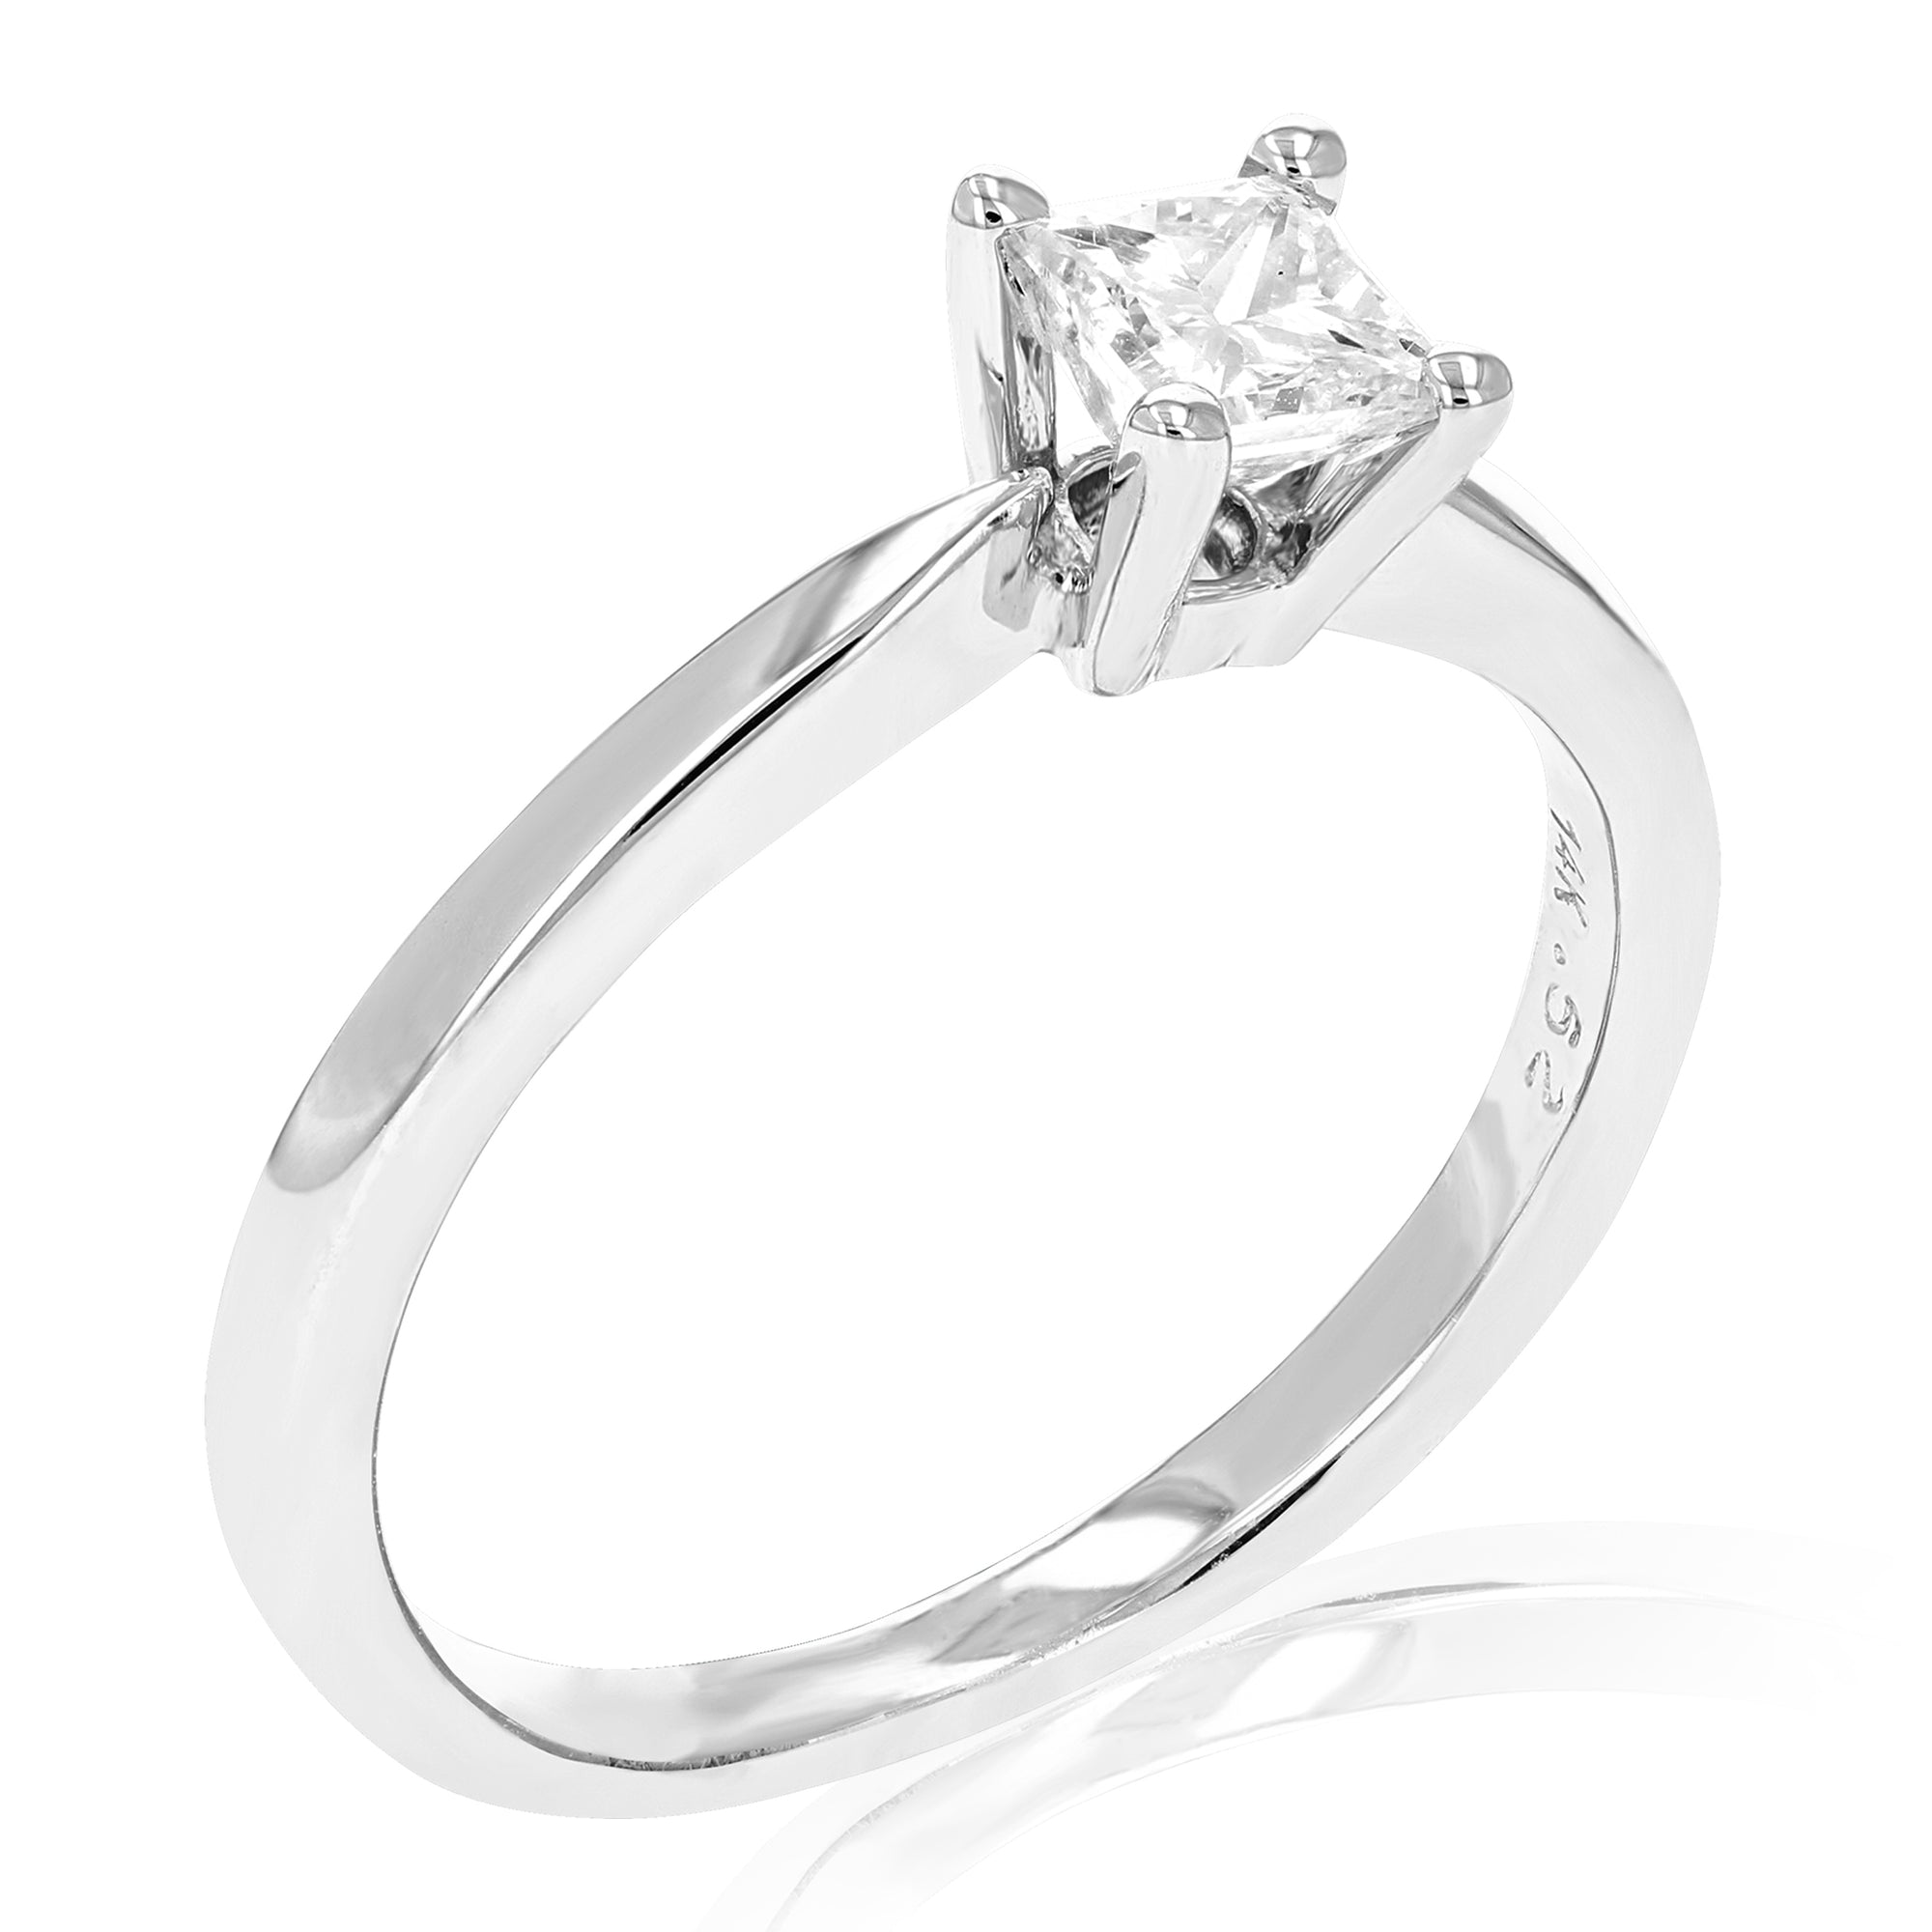 1/2 cttw Princess Cut Diamond Solitaire Engagement Ring 14K White Gold Size 7